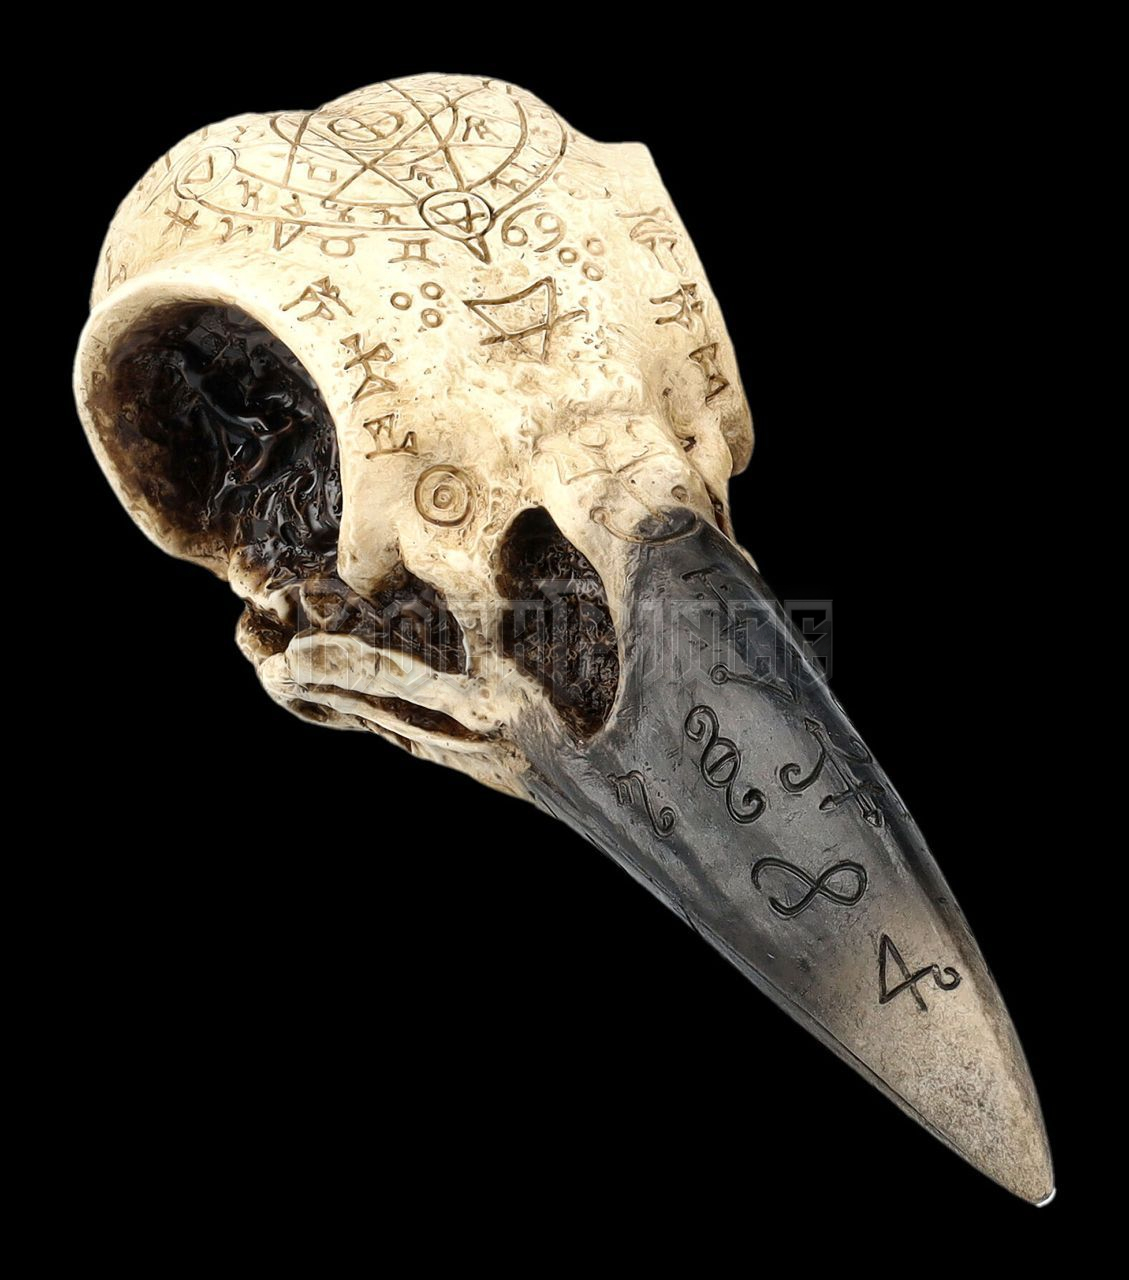 Skull - Raven Skull with Mystic Symbols - 708-7989